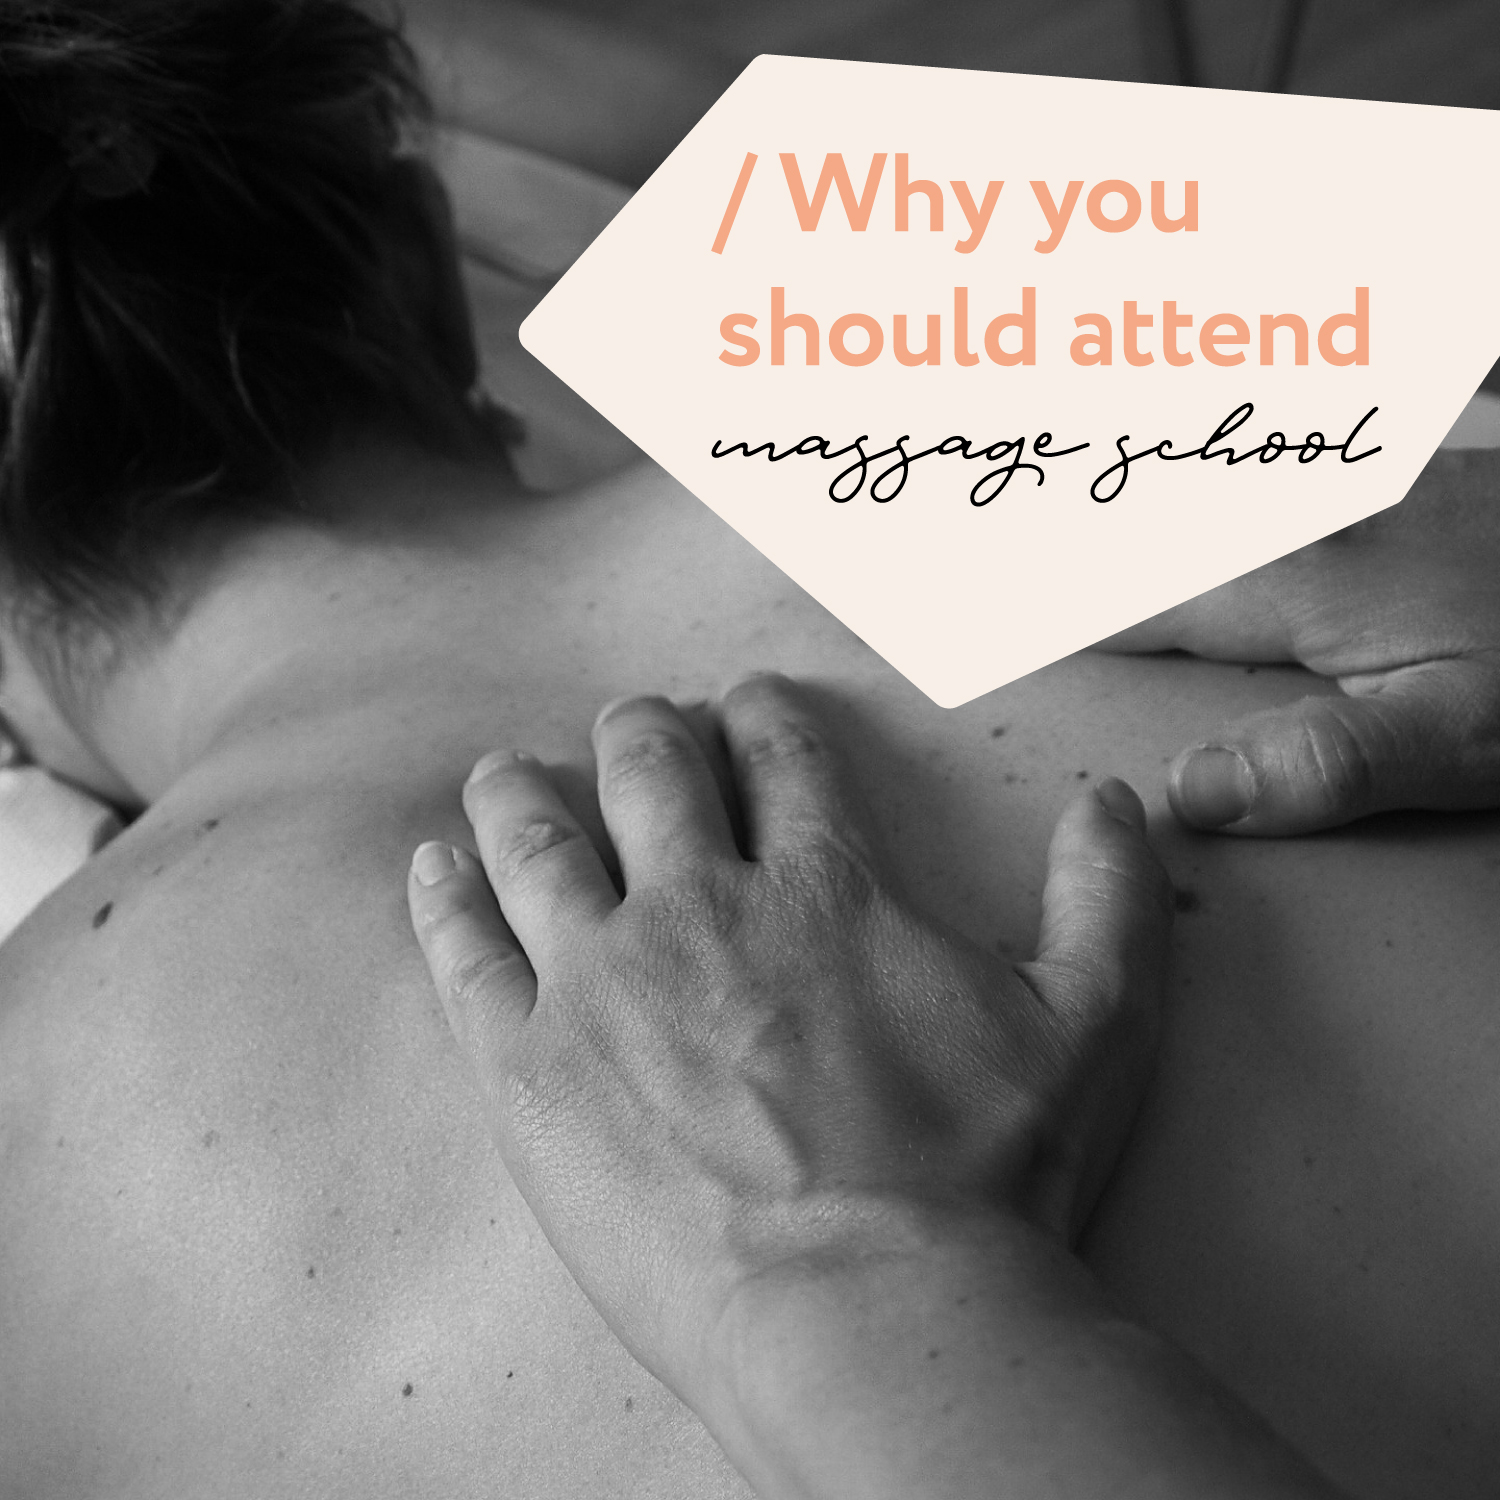 Tutorial on how to massage lower back #massage #massagetherapy